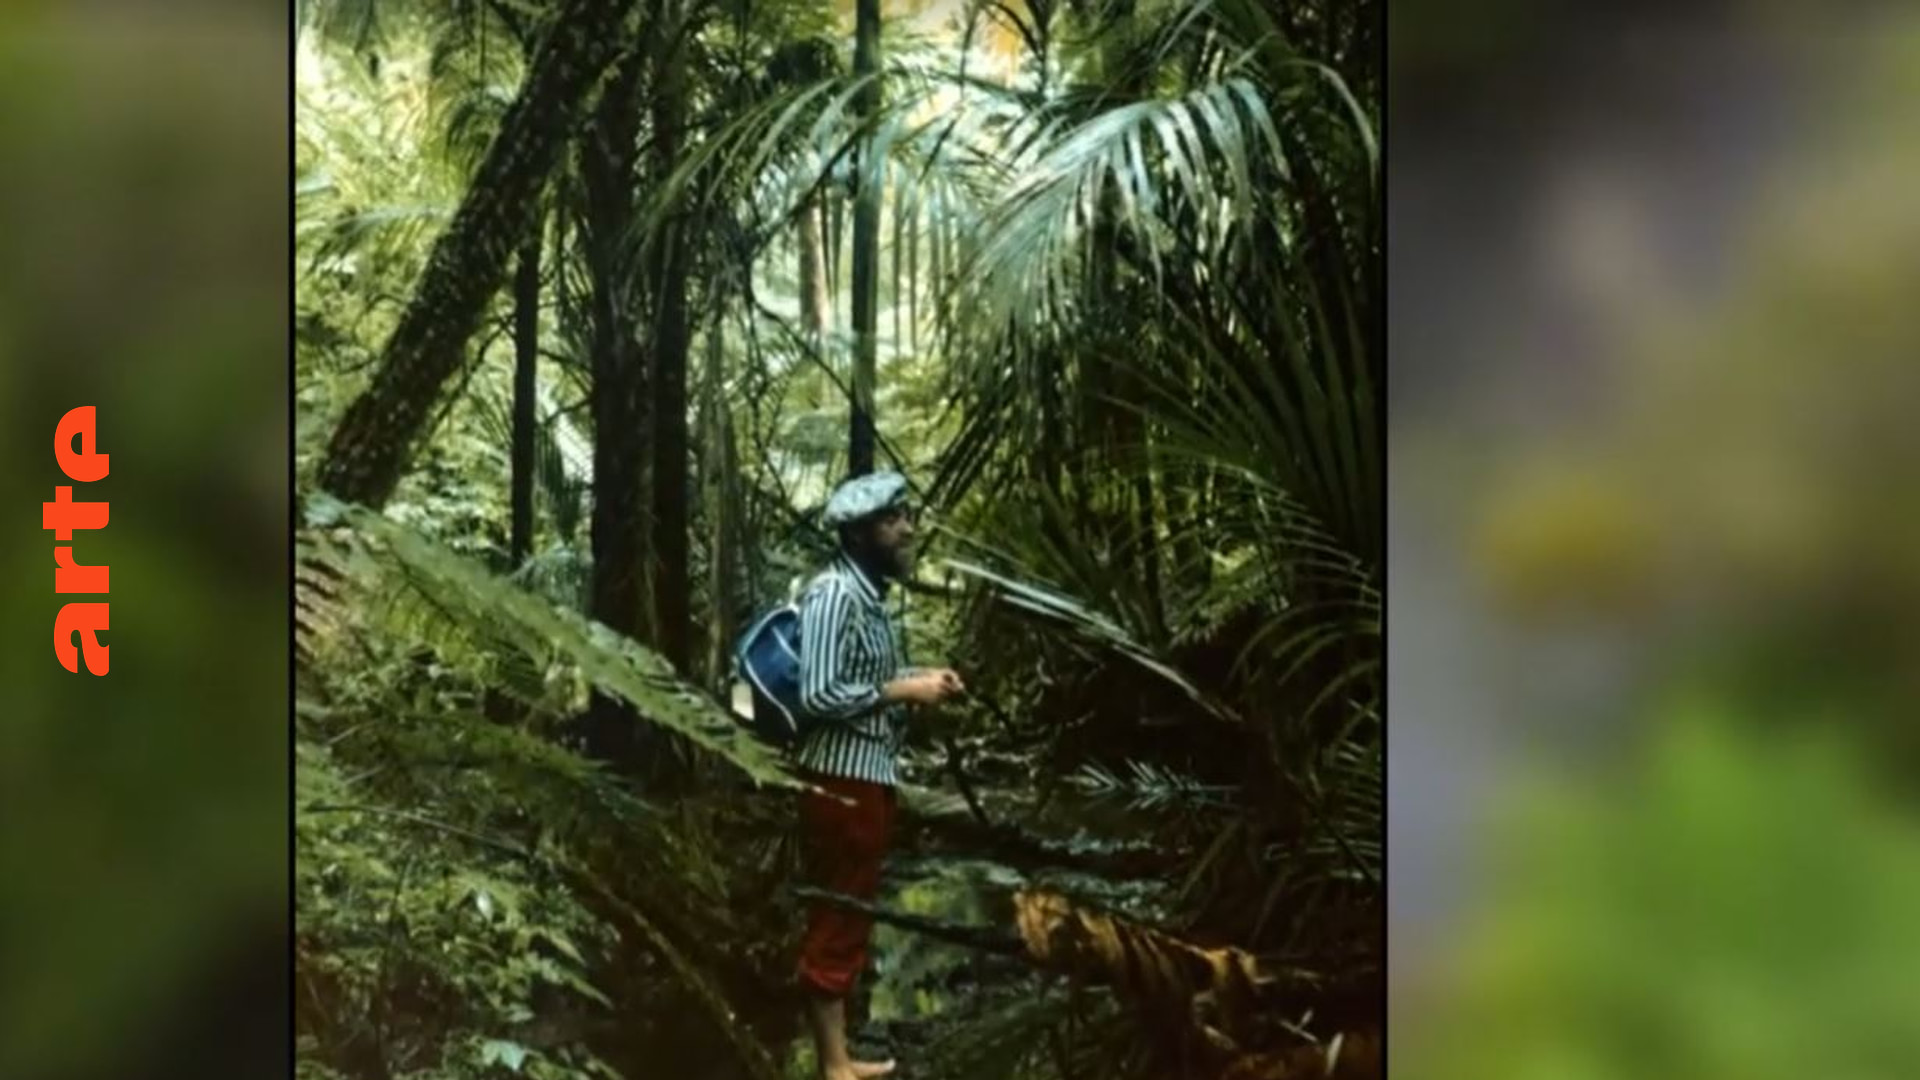 Das fruchtbare Neuseeland des Malers Hundertwasser